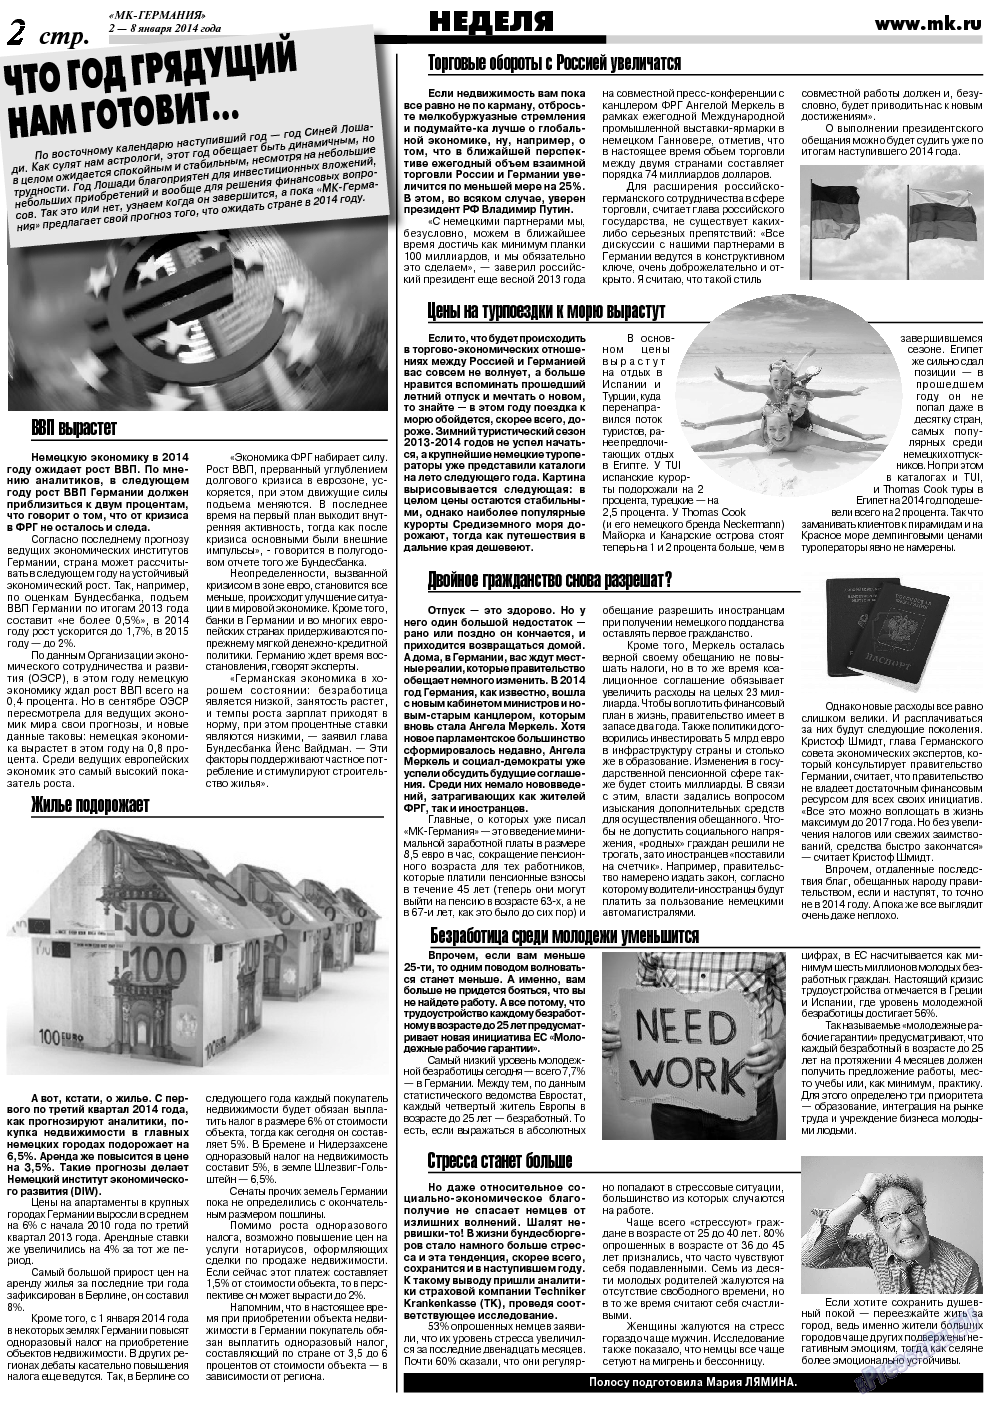 МК-Германия, газета. 2014 №1 стр.2